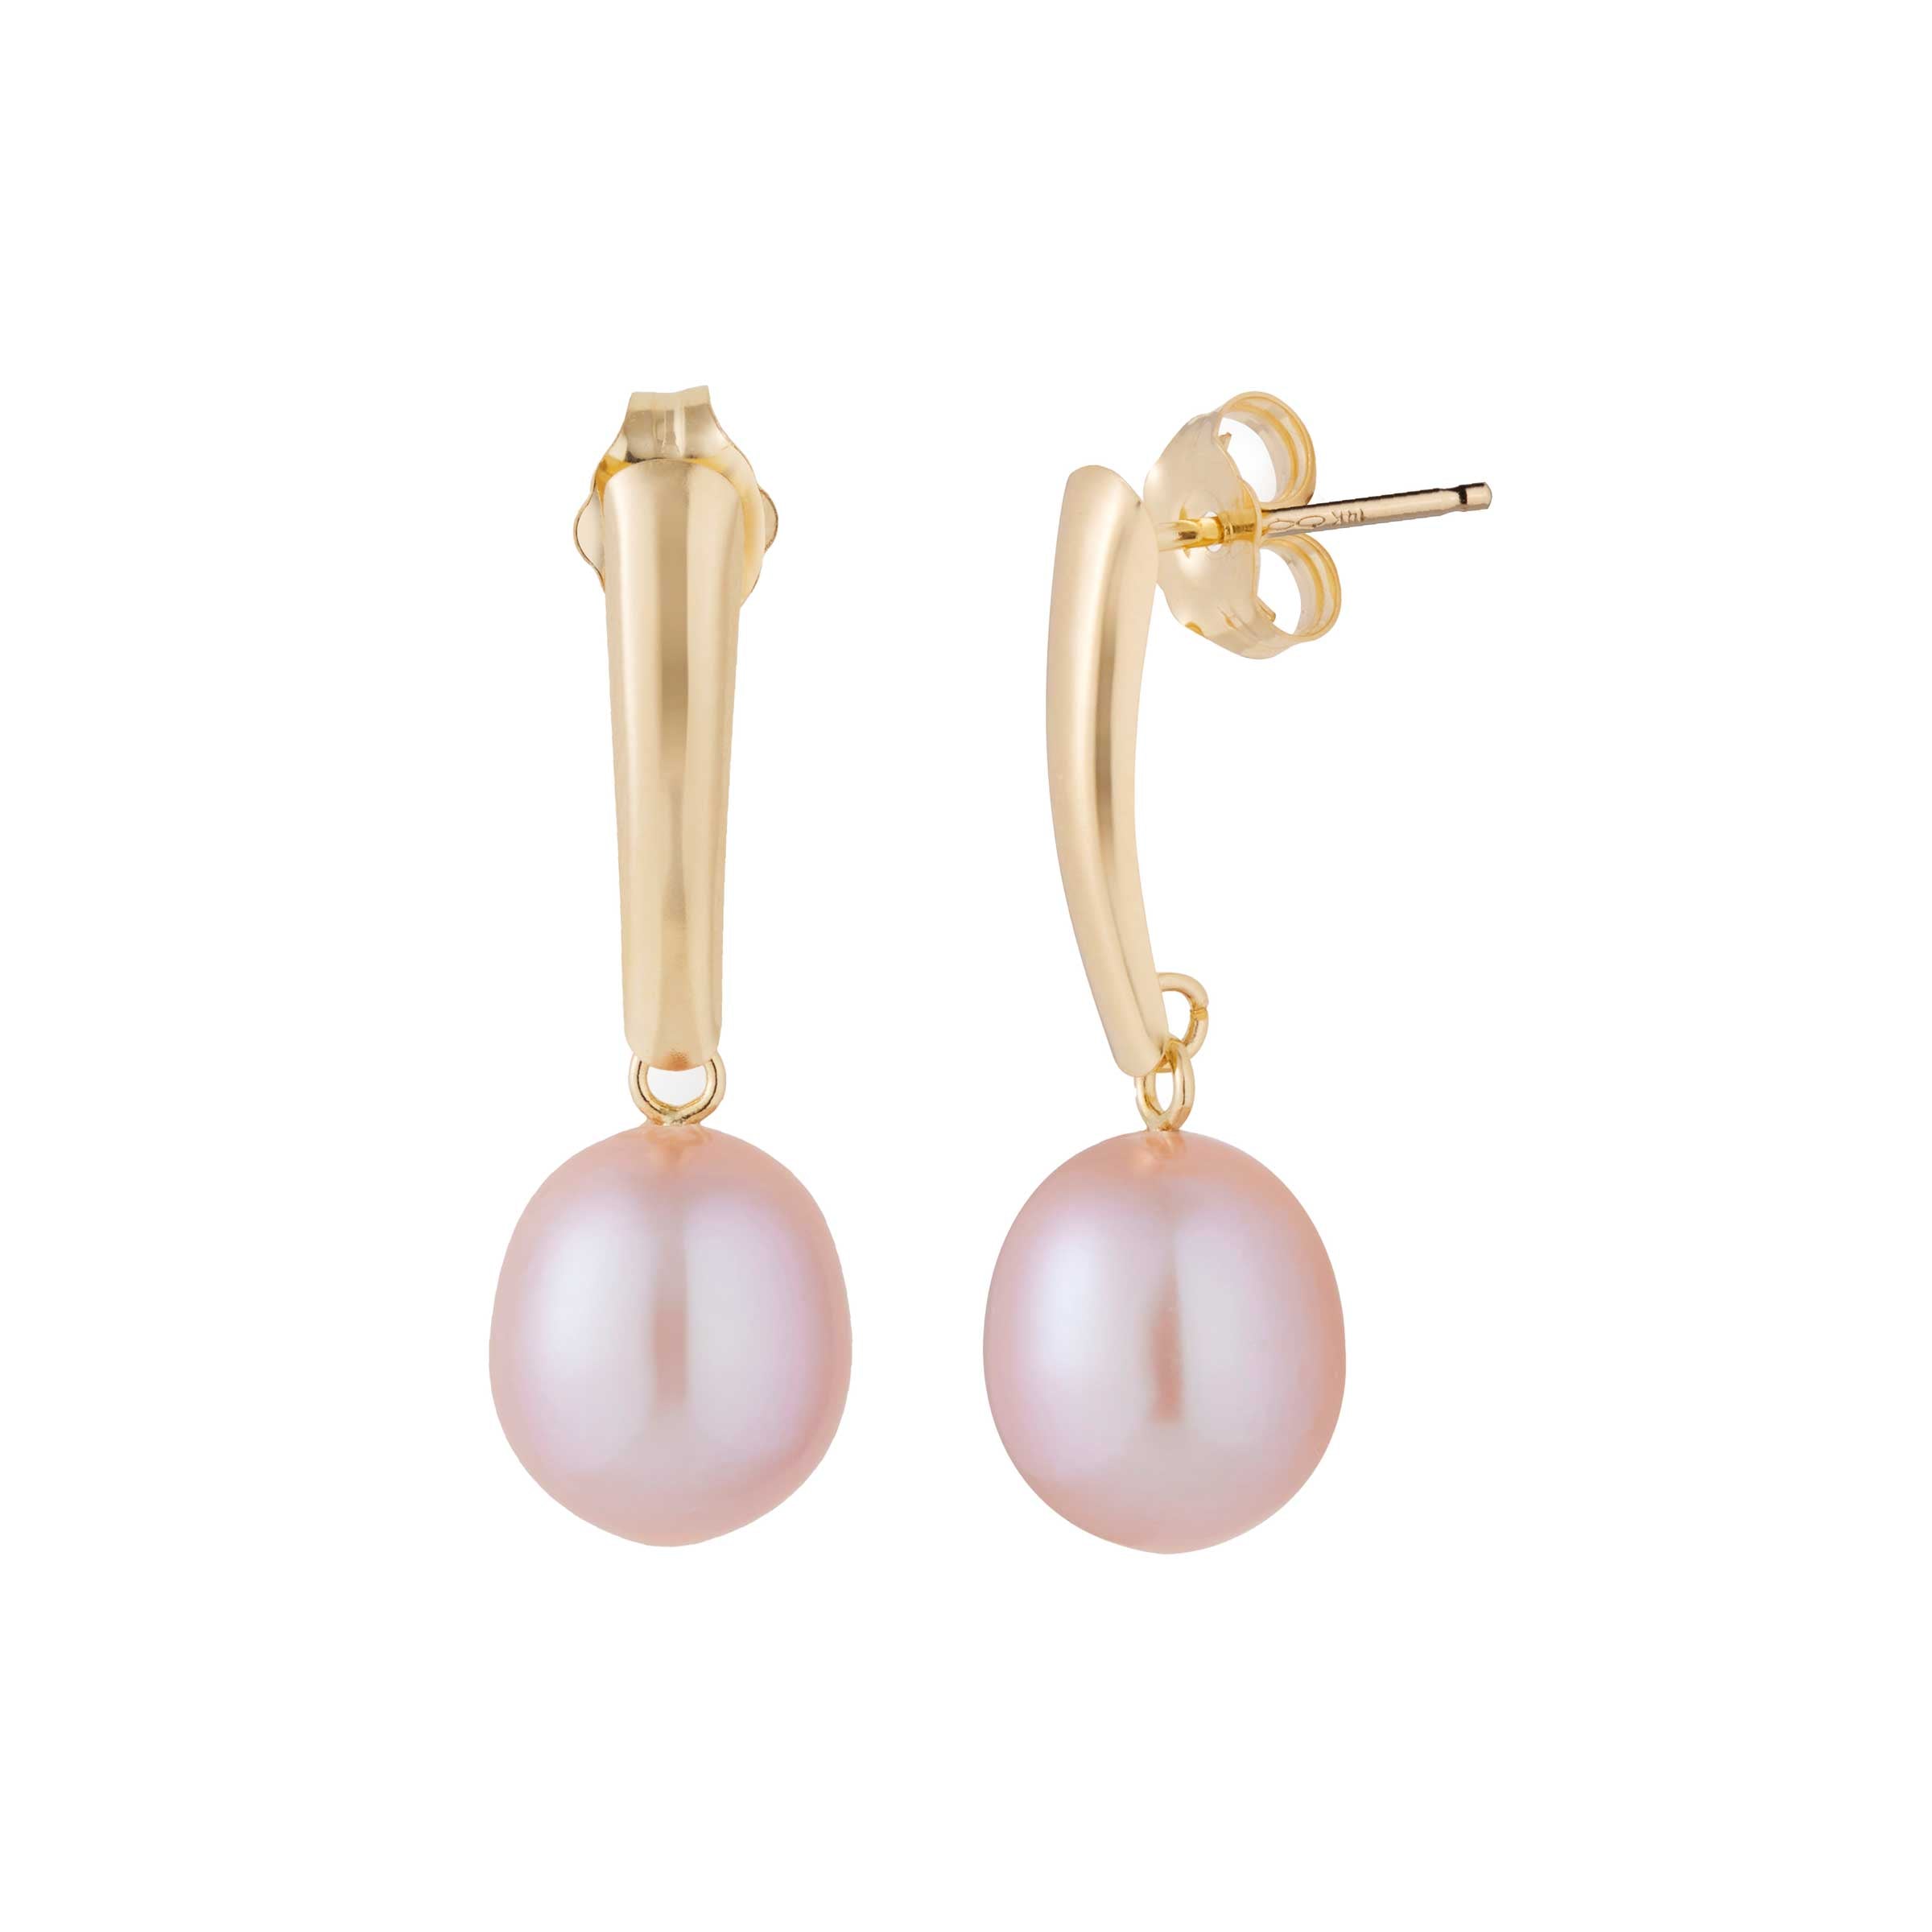 Buy Rose Gold-Toned Earrings for Women by Jewels galaxy Online | Ajio.com